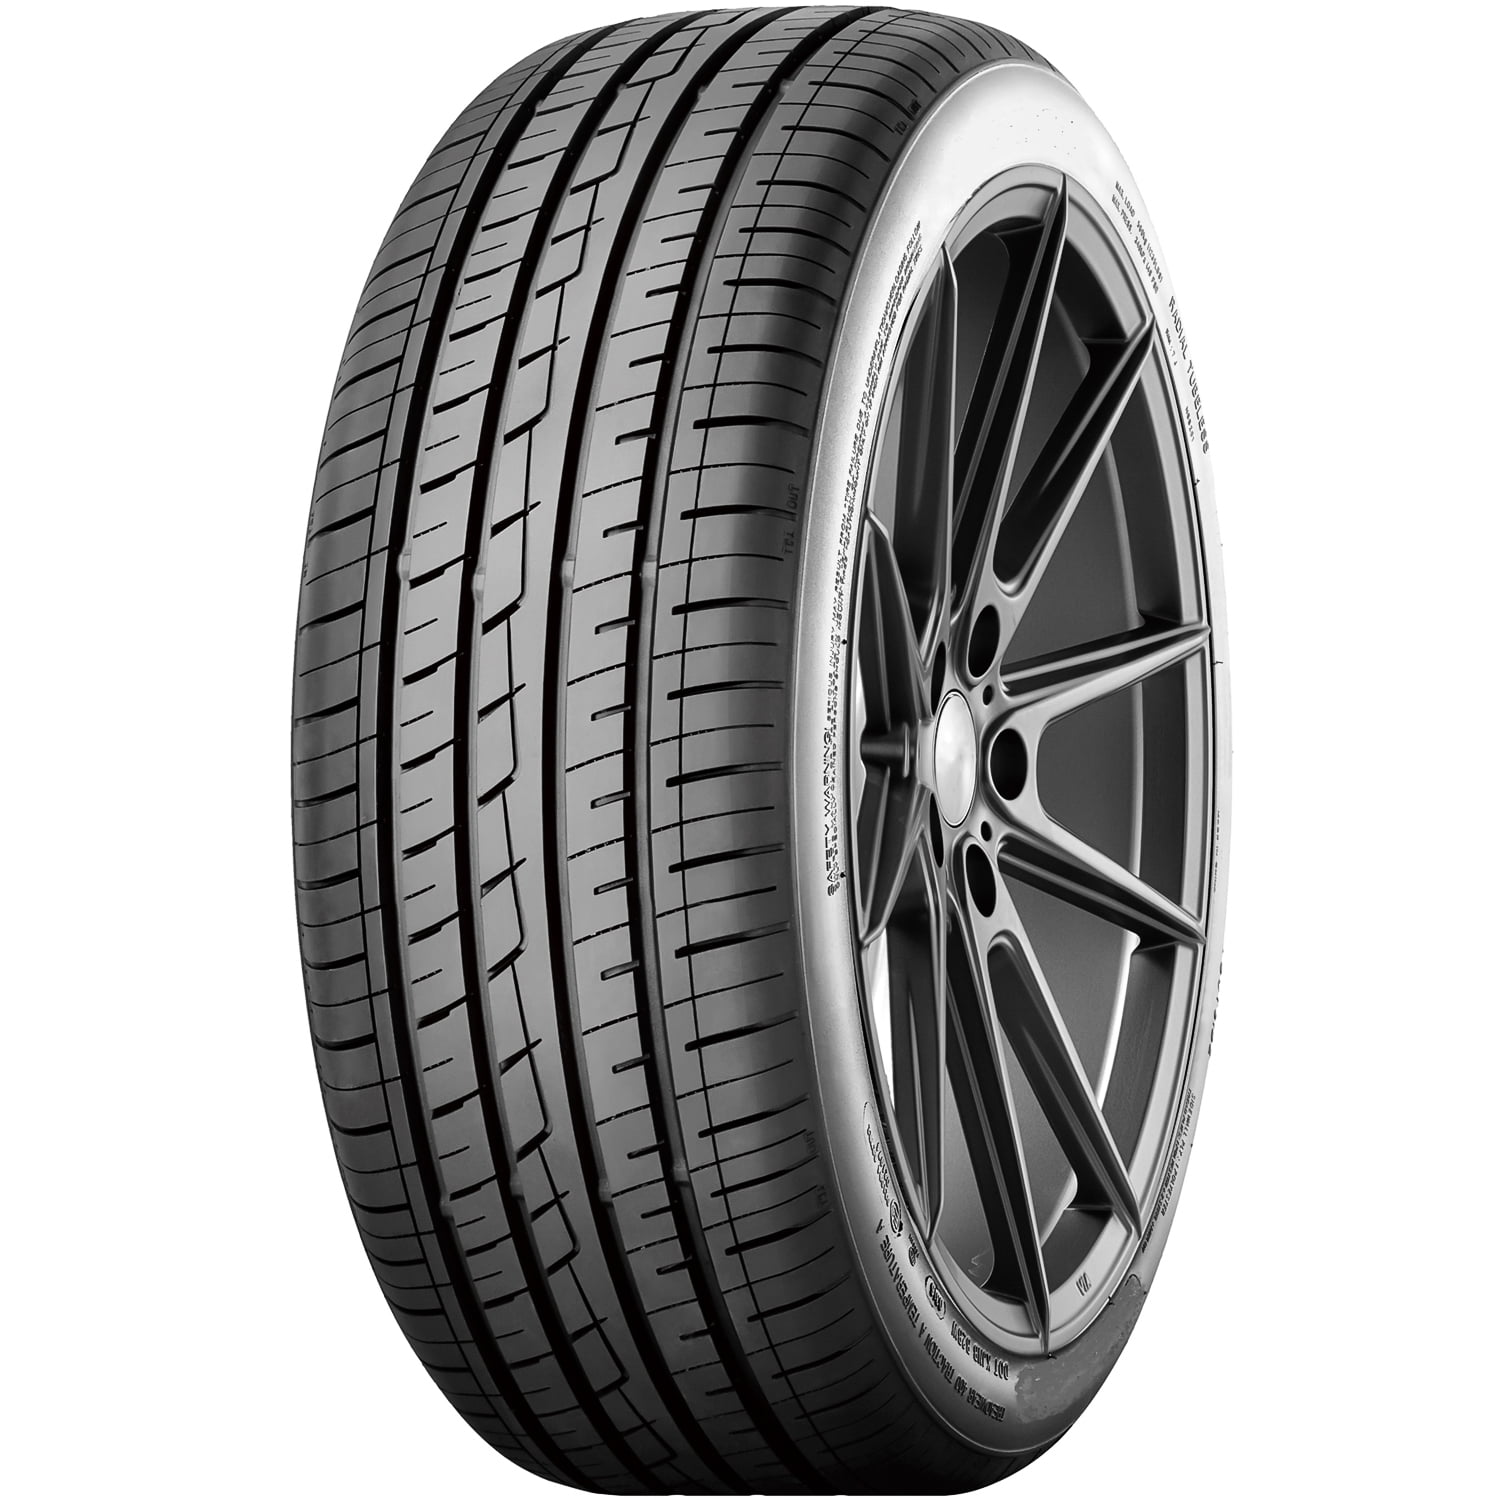 Tire Bearway BW668 245/55R19 107V XL AS A/S Performance - Walmart.com